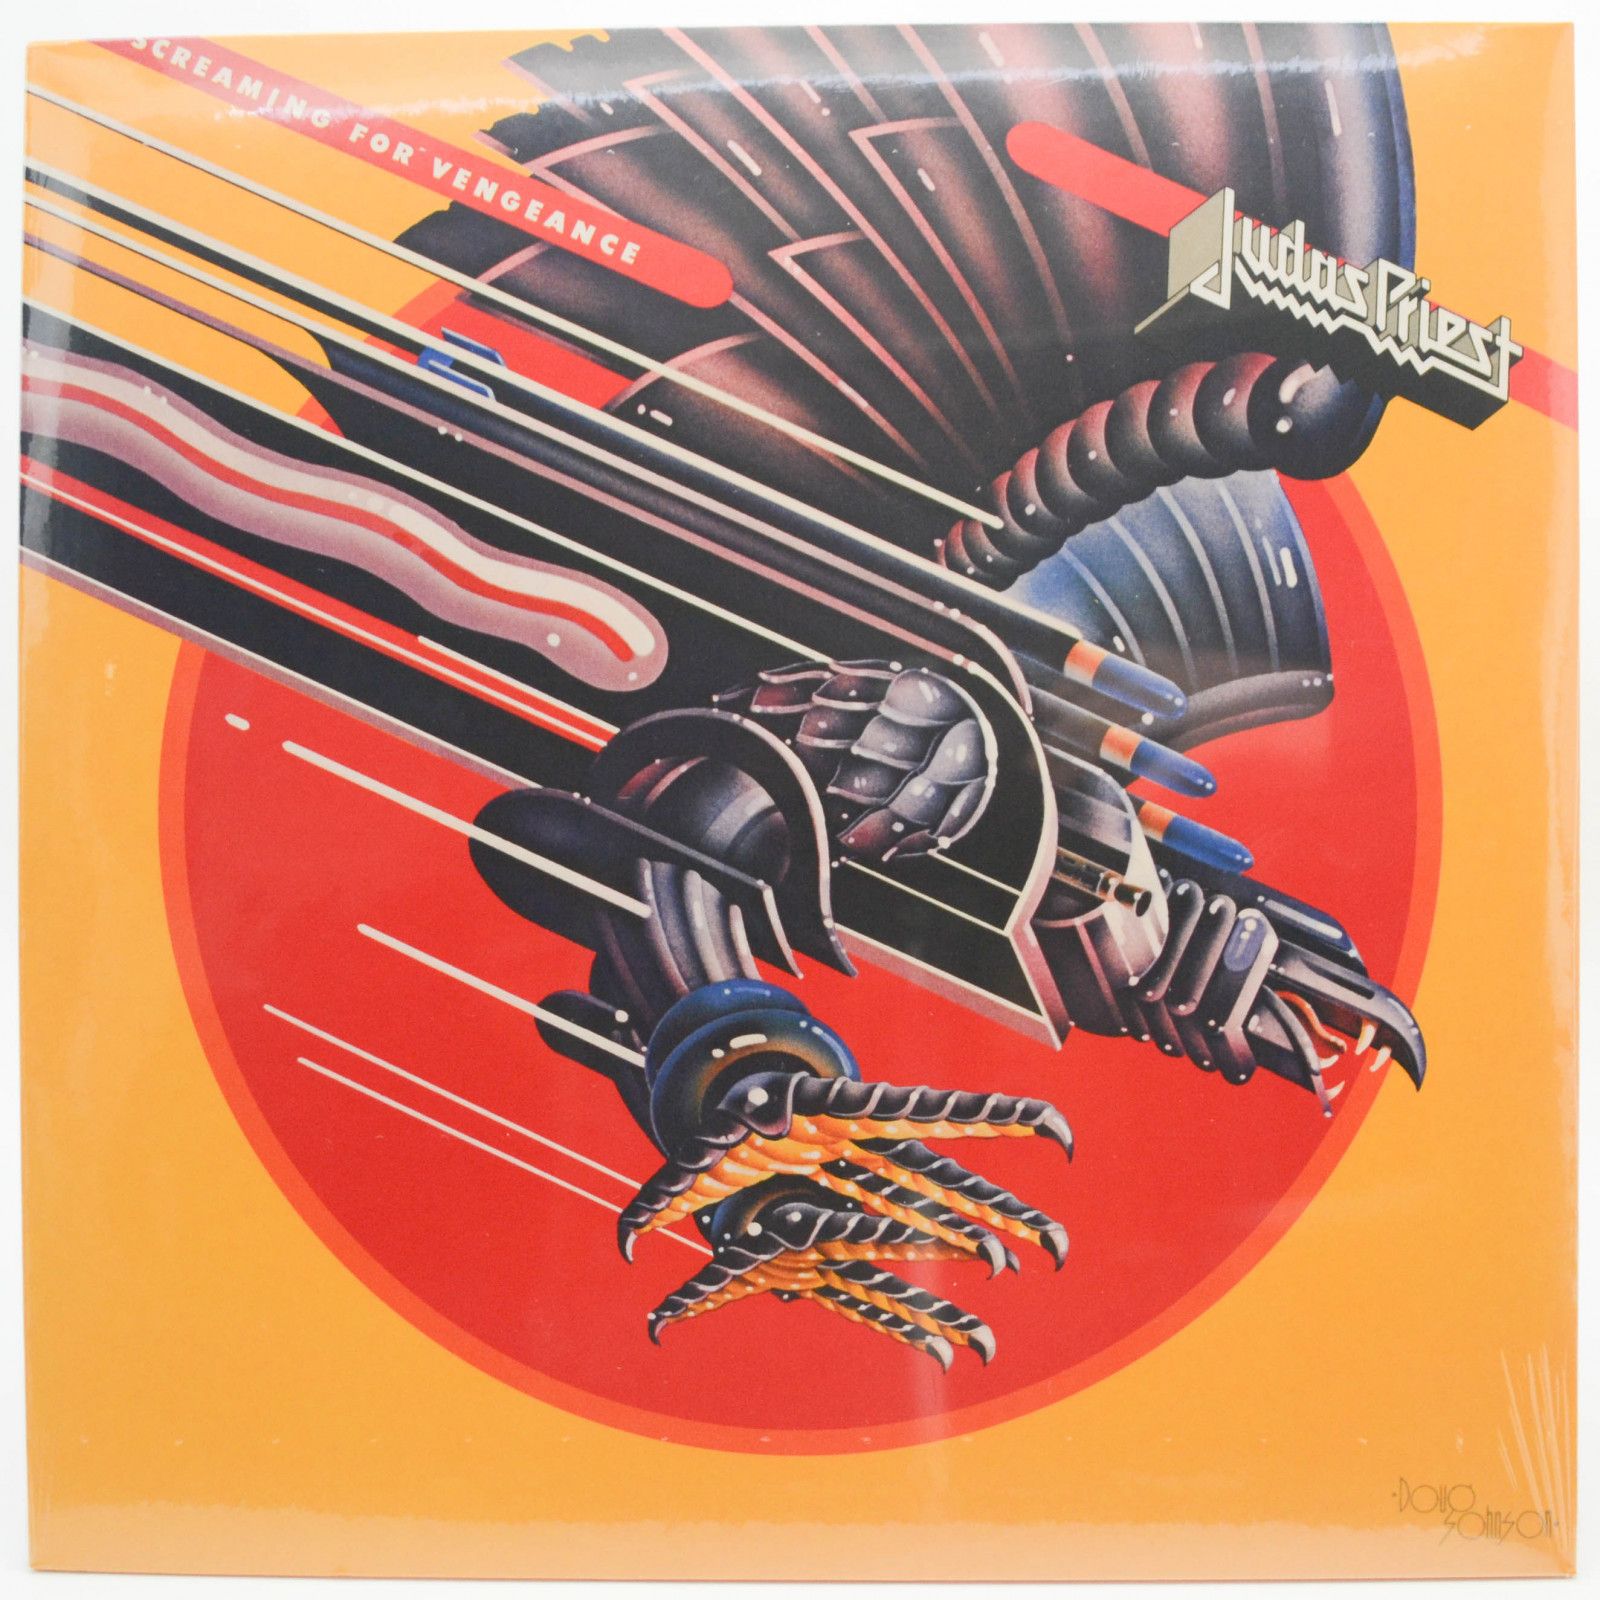 Judas Priest — Screaming For Vengeance, 1982